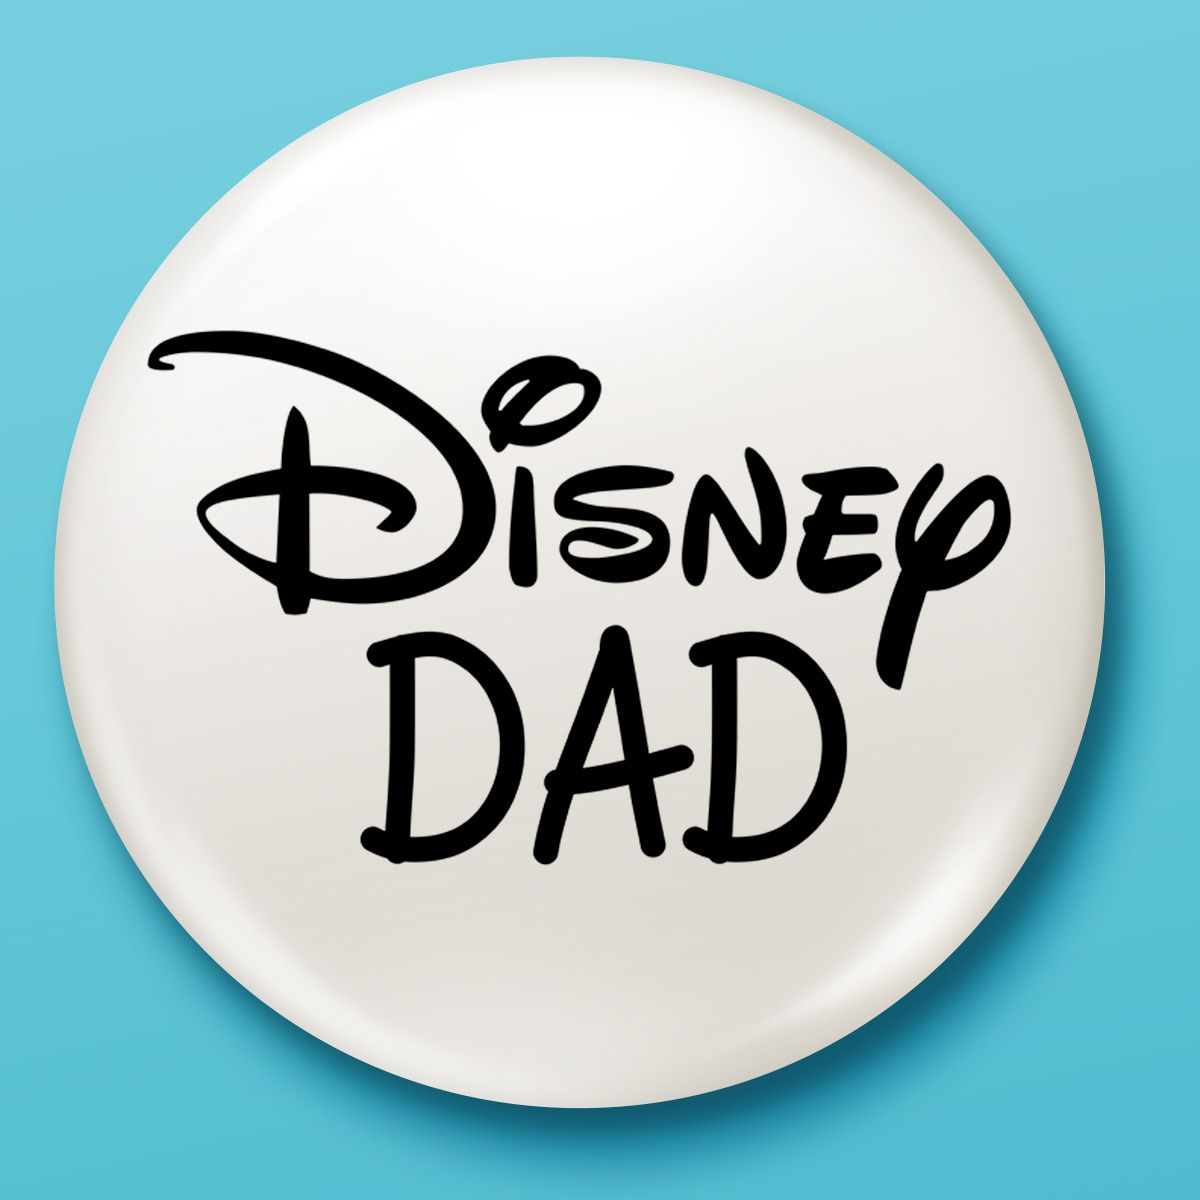 Disney Dad Image